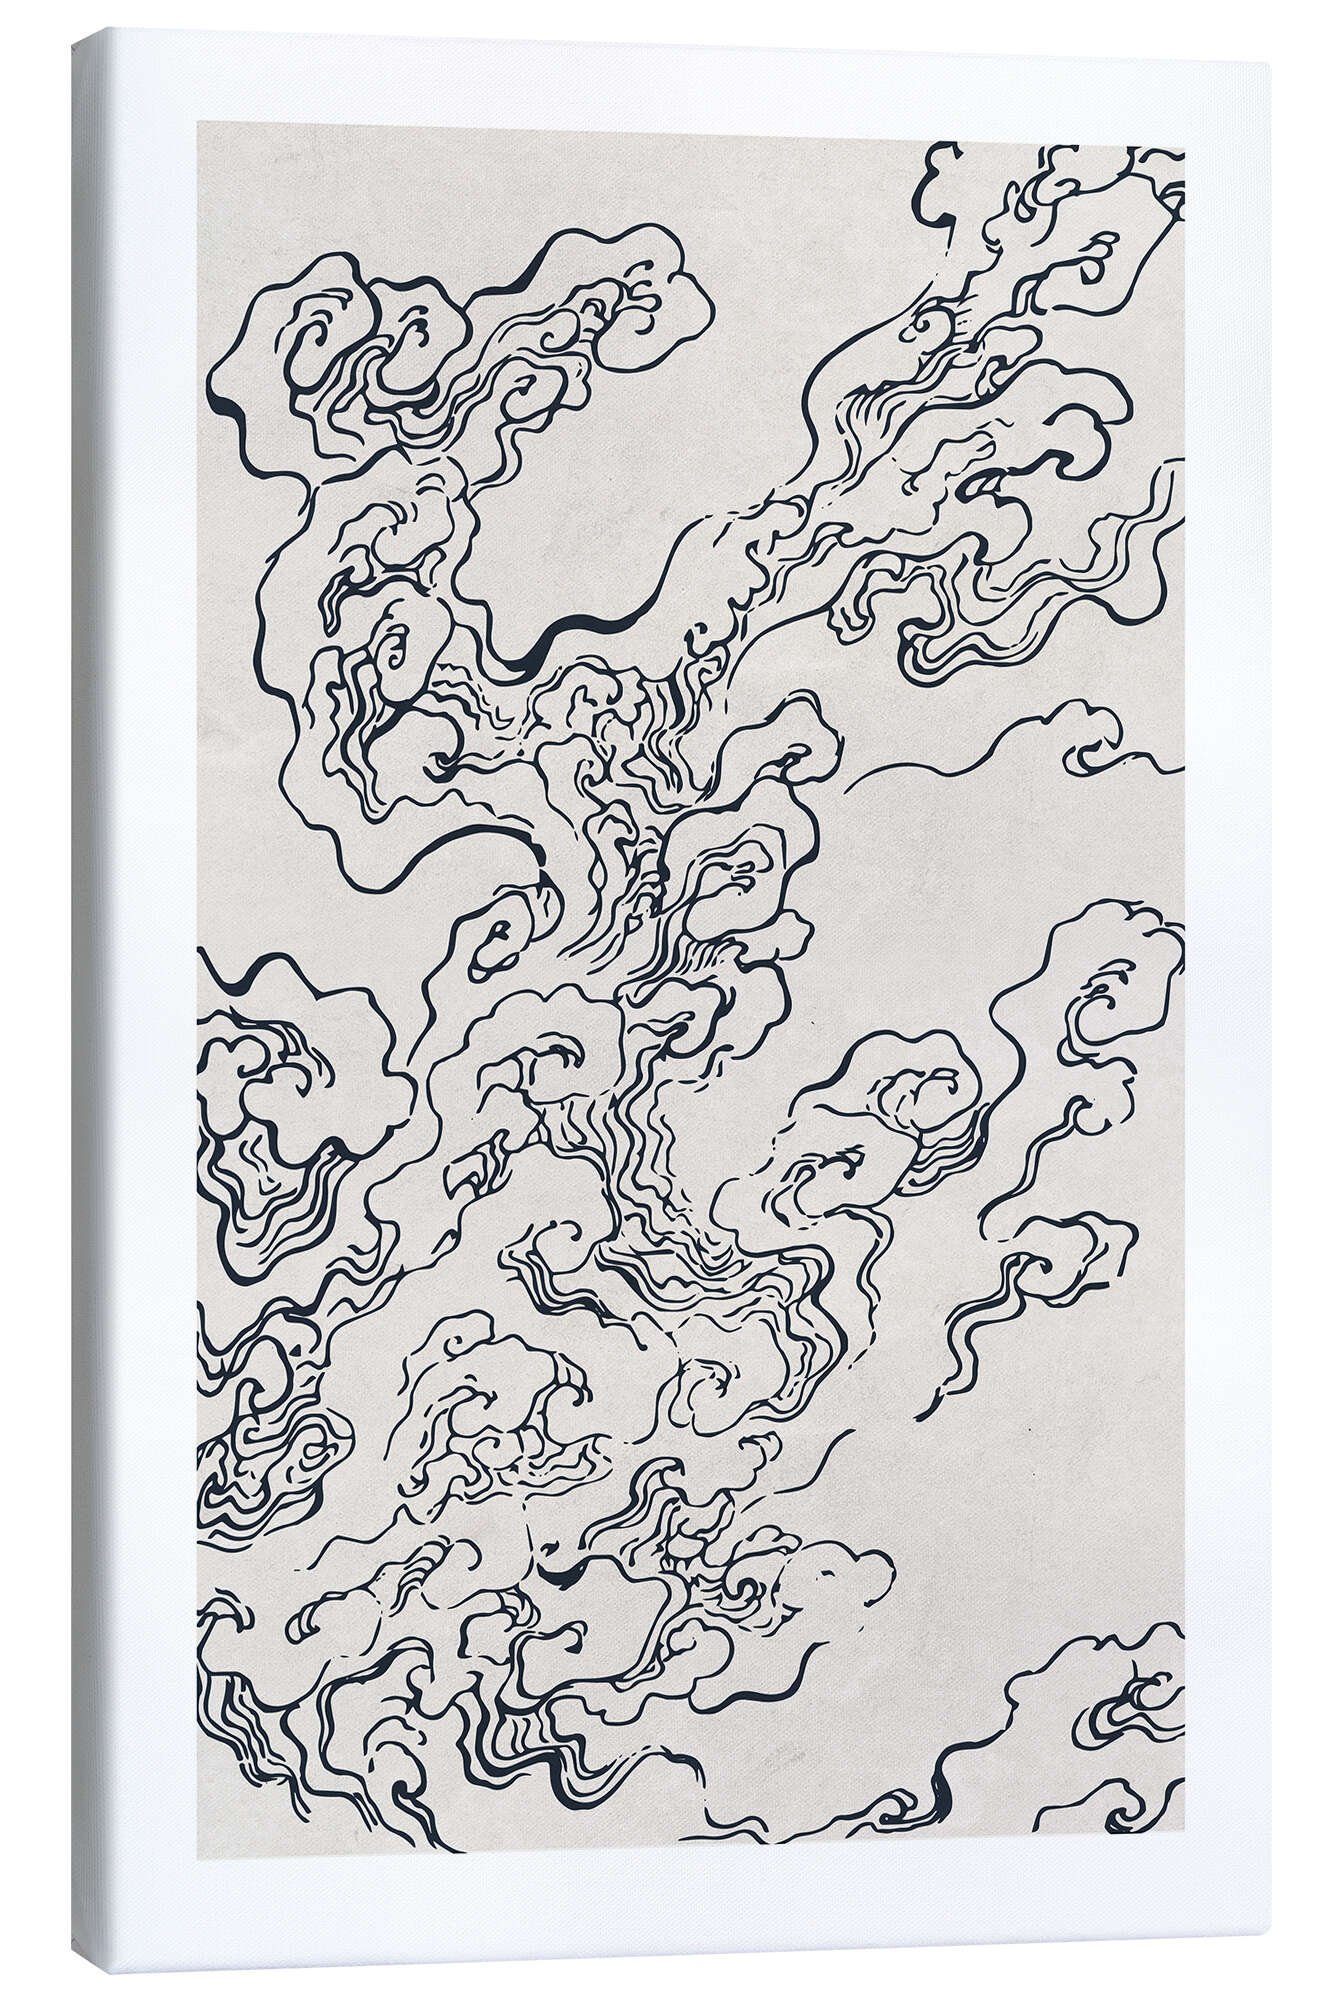 Posterlounge Leinwandbild Mori Yūzan, Wolken, Wohnzimmer Japandi Illustration